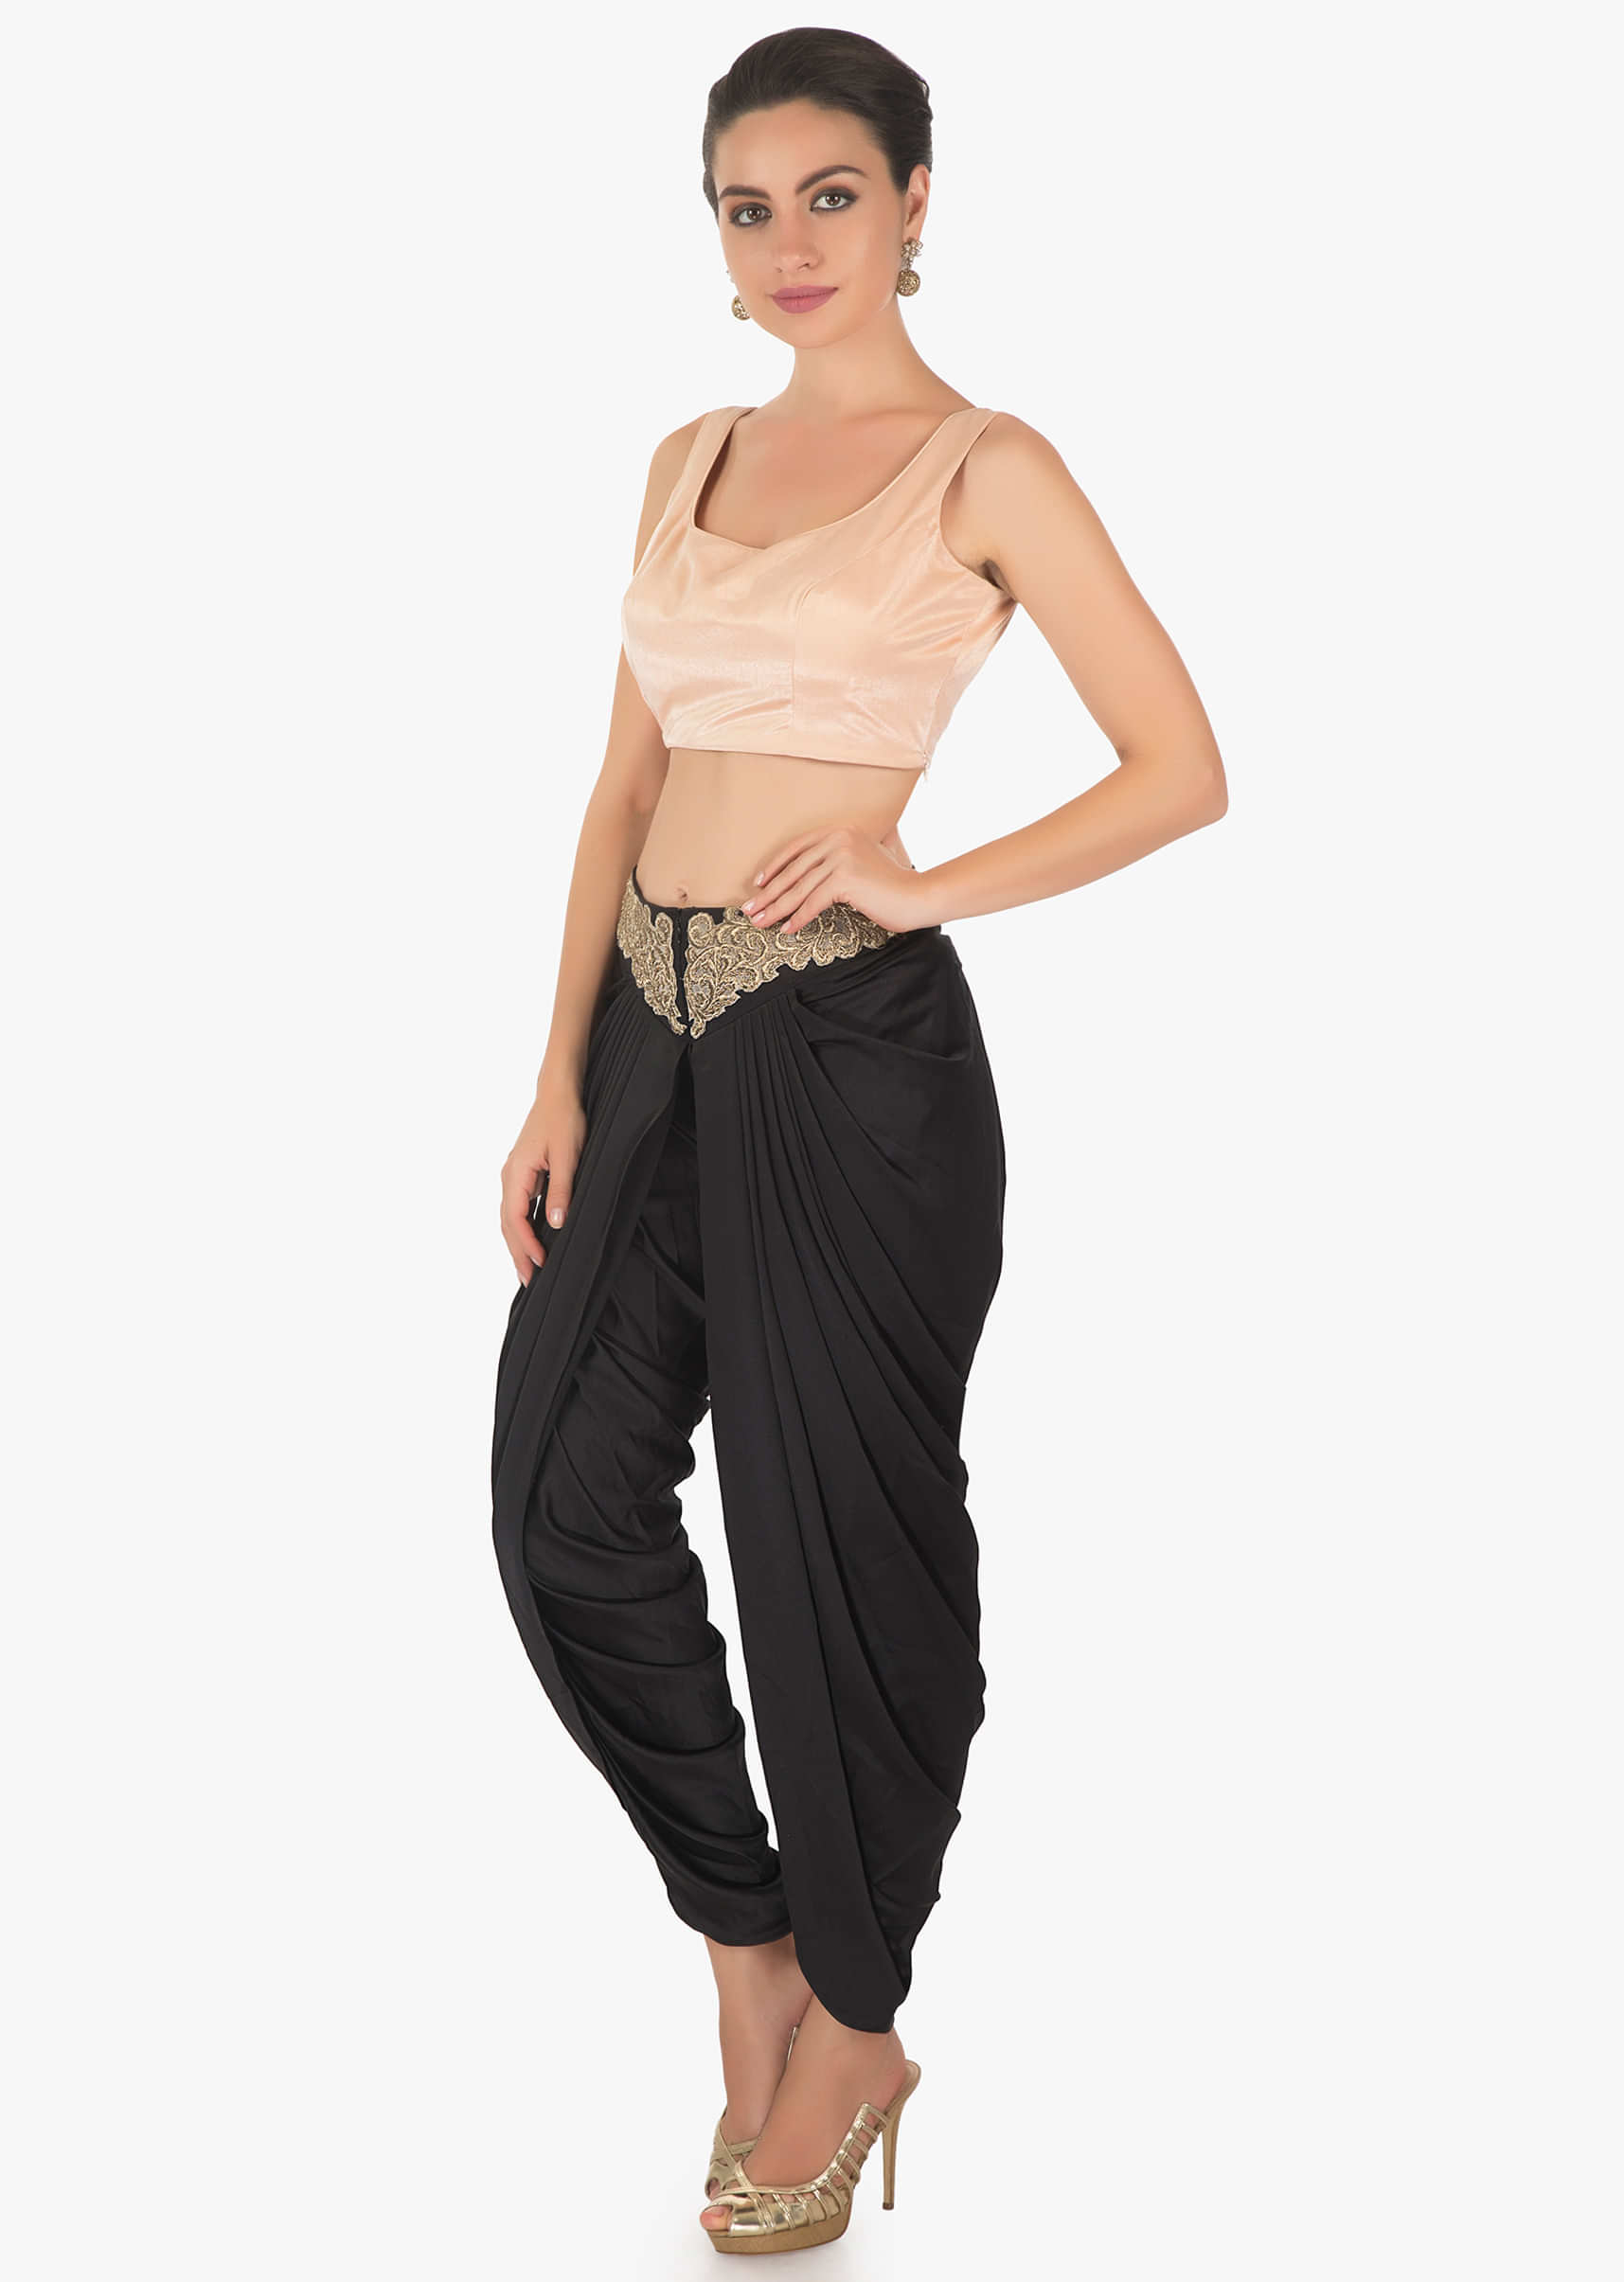 Peach Crop Top In Satin With A Black Fancy Dhoti Pants Online - Kalki Fashion